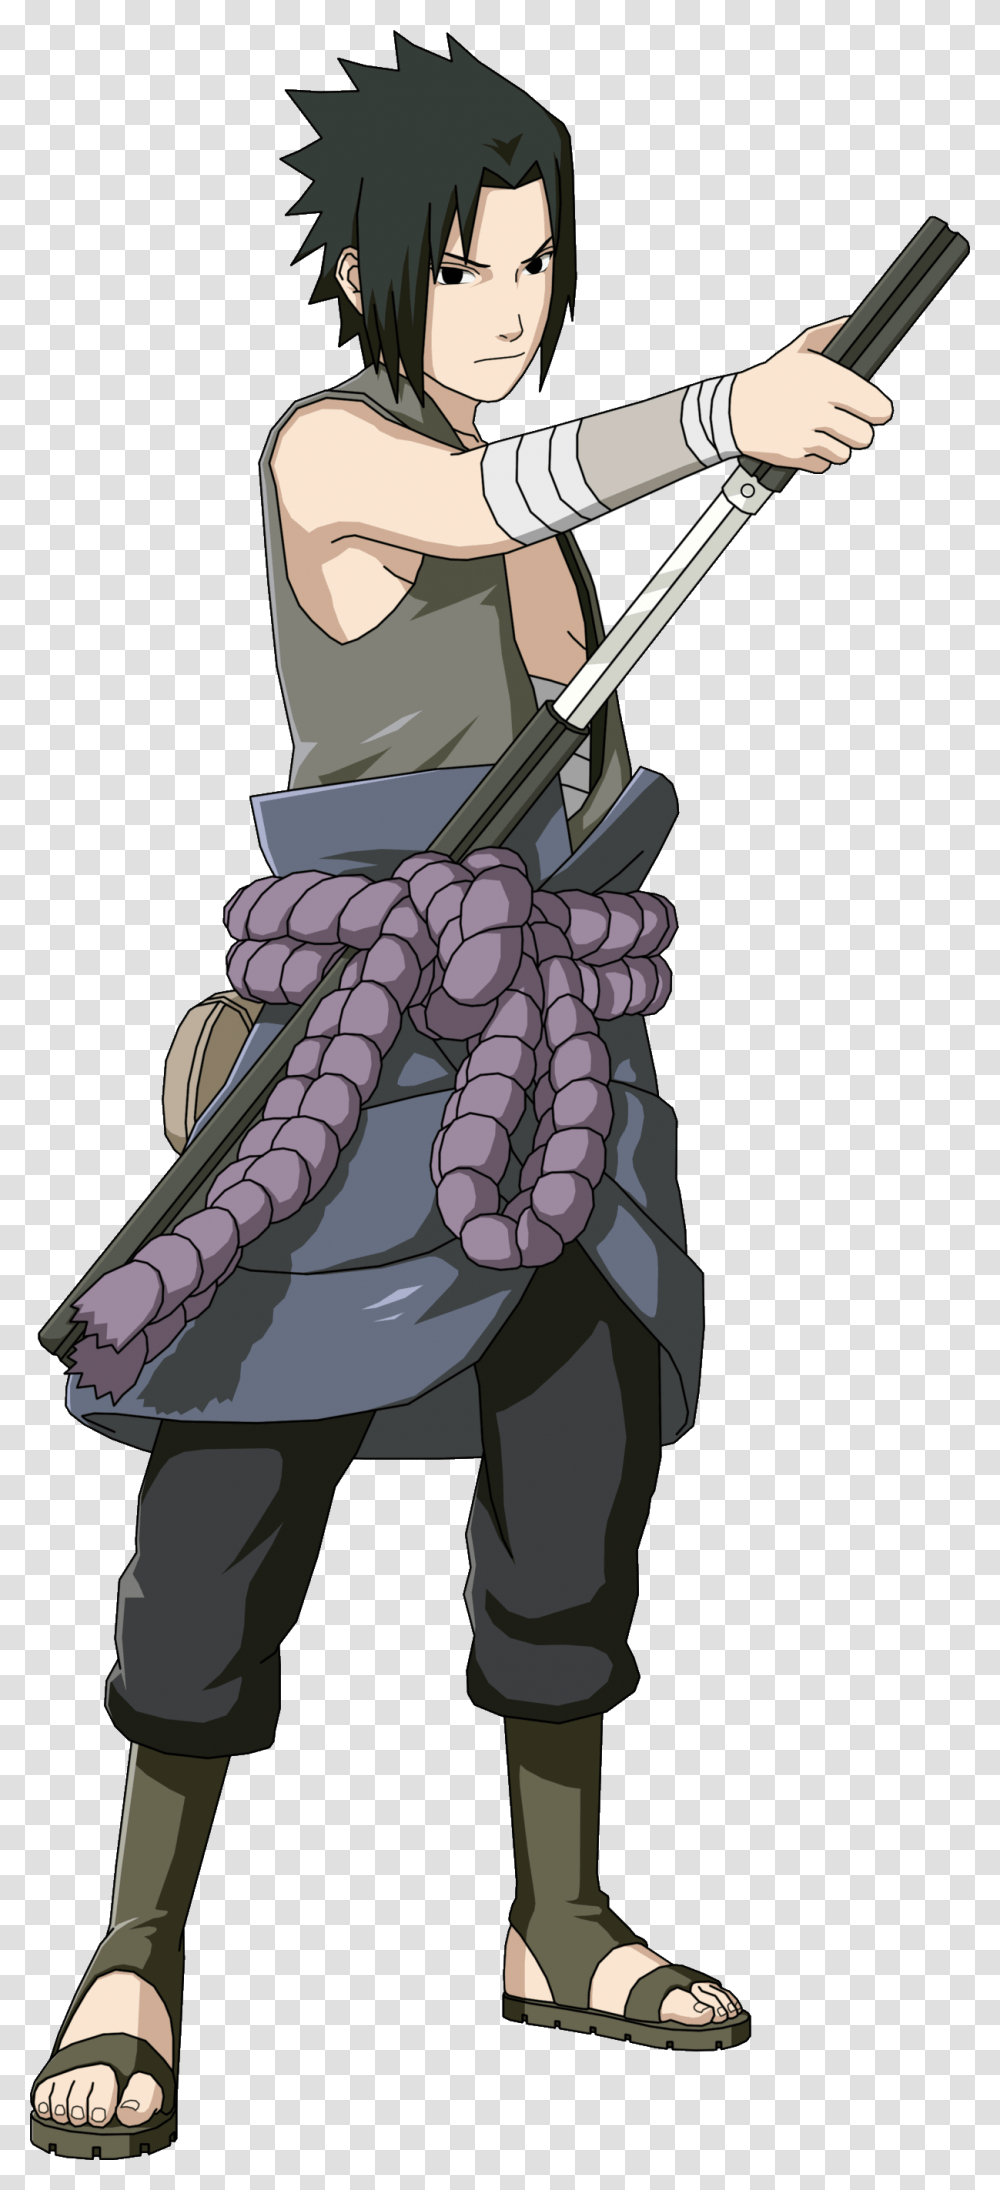 Sasuke Image With Background Shippuden Ultimate Ninja Storm, Person, Costume, Hug Transparent Png